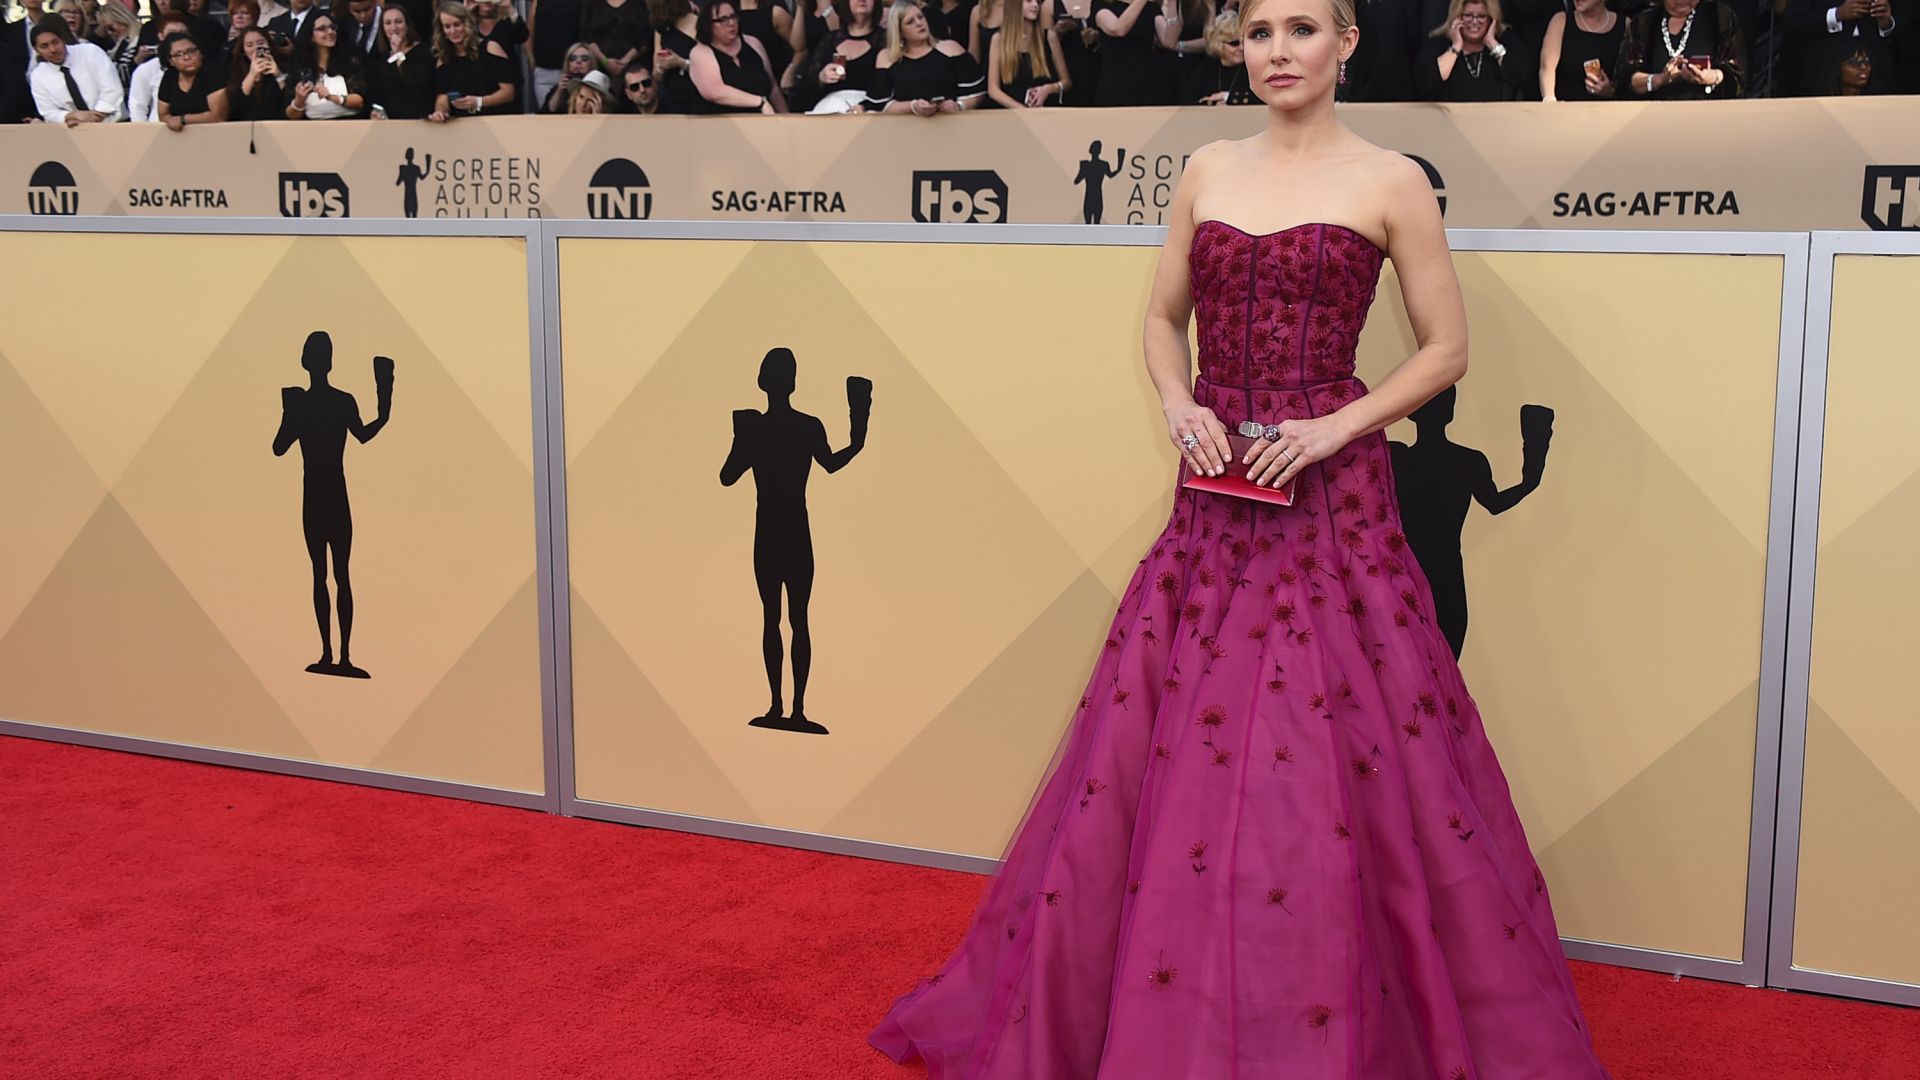 Кристен Белл, Kristen Bell, dress, Screen Actors Guild Awards 2018, 4k (horizontal)